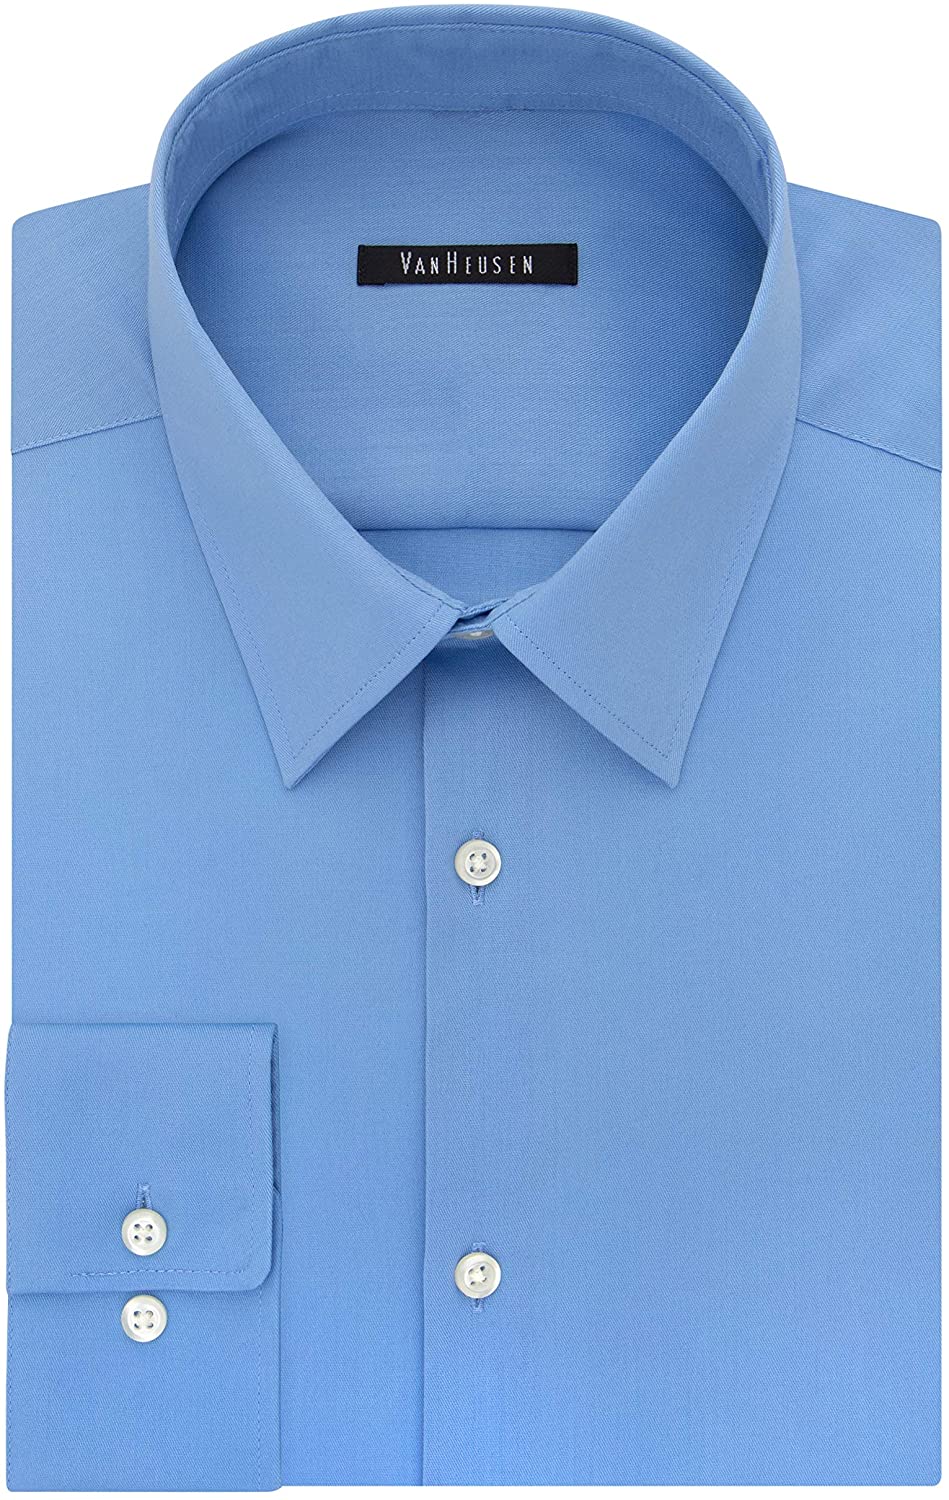 Van Heusen Men's Dress Shirt Slim Fit Flex Collar Stretch Solid | eBay